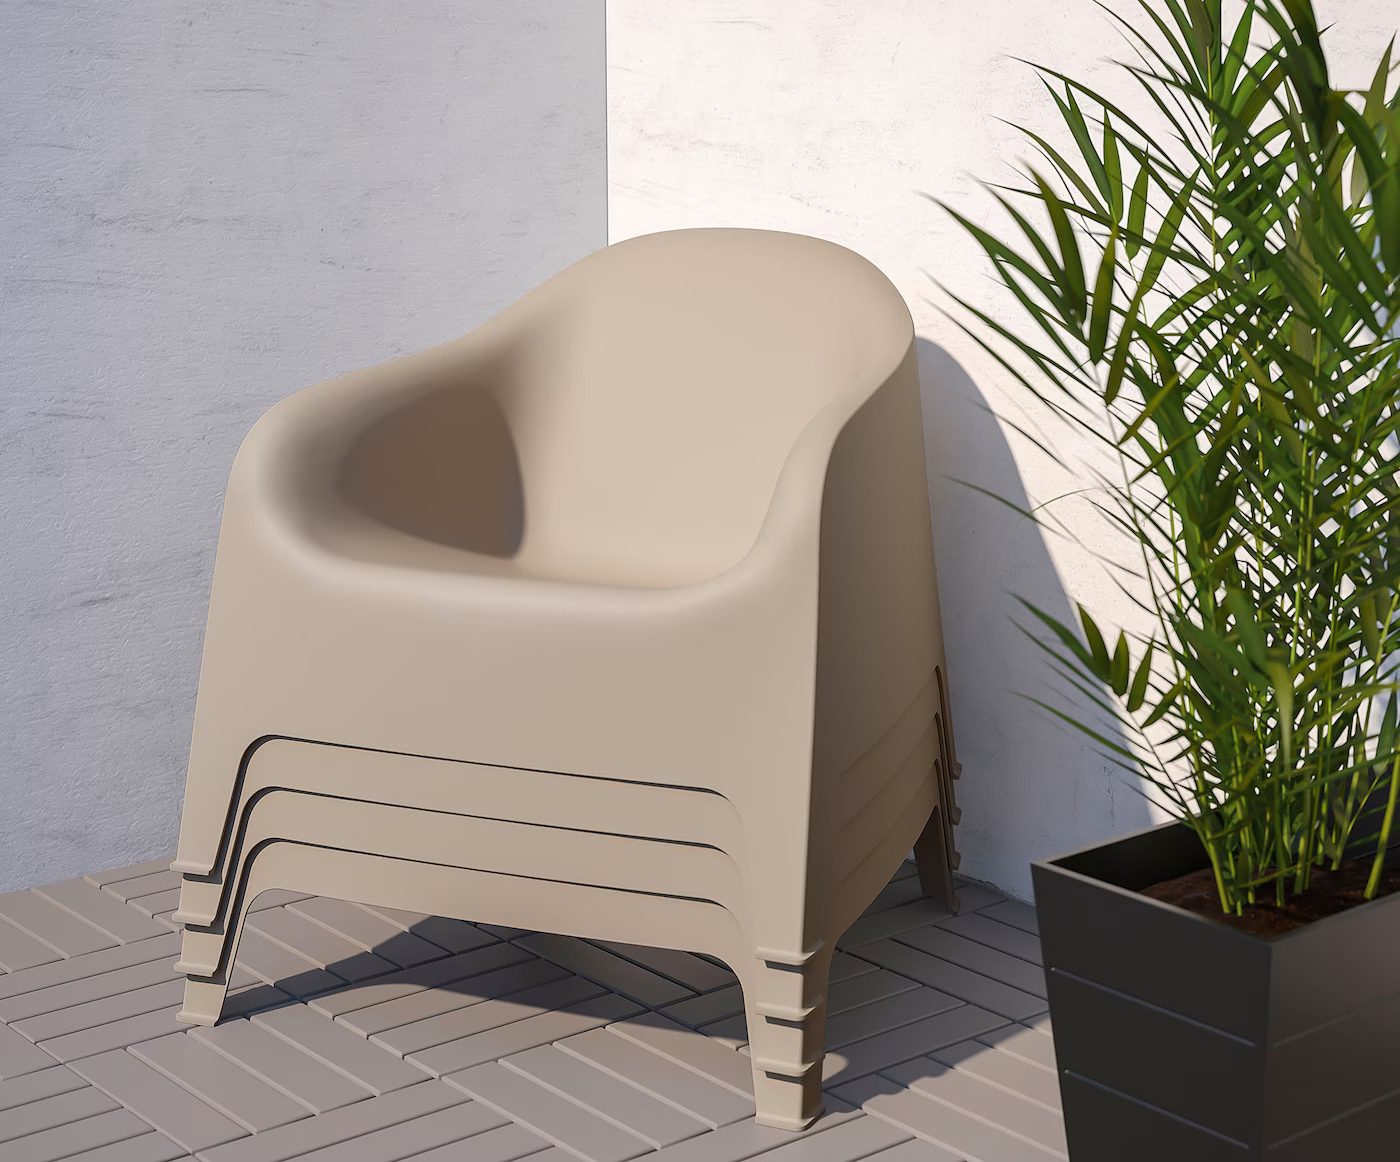 SKARPÖ outdoor armchair by Ikea